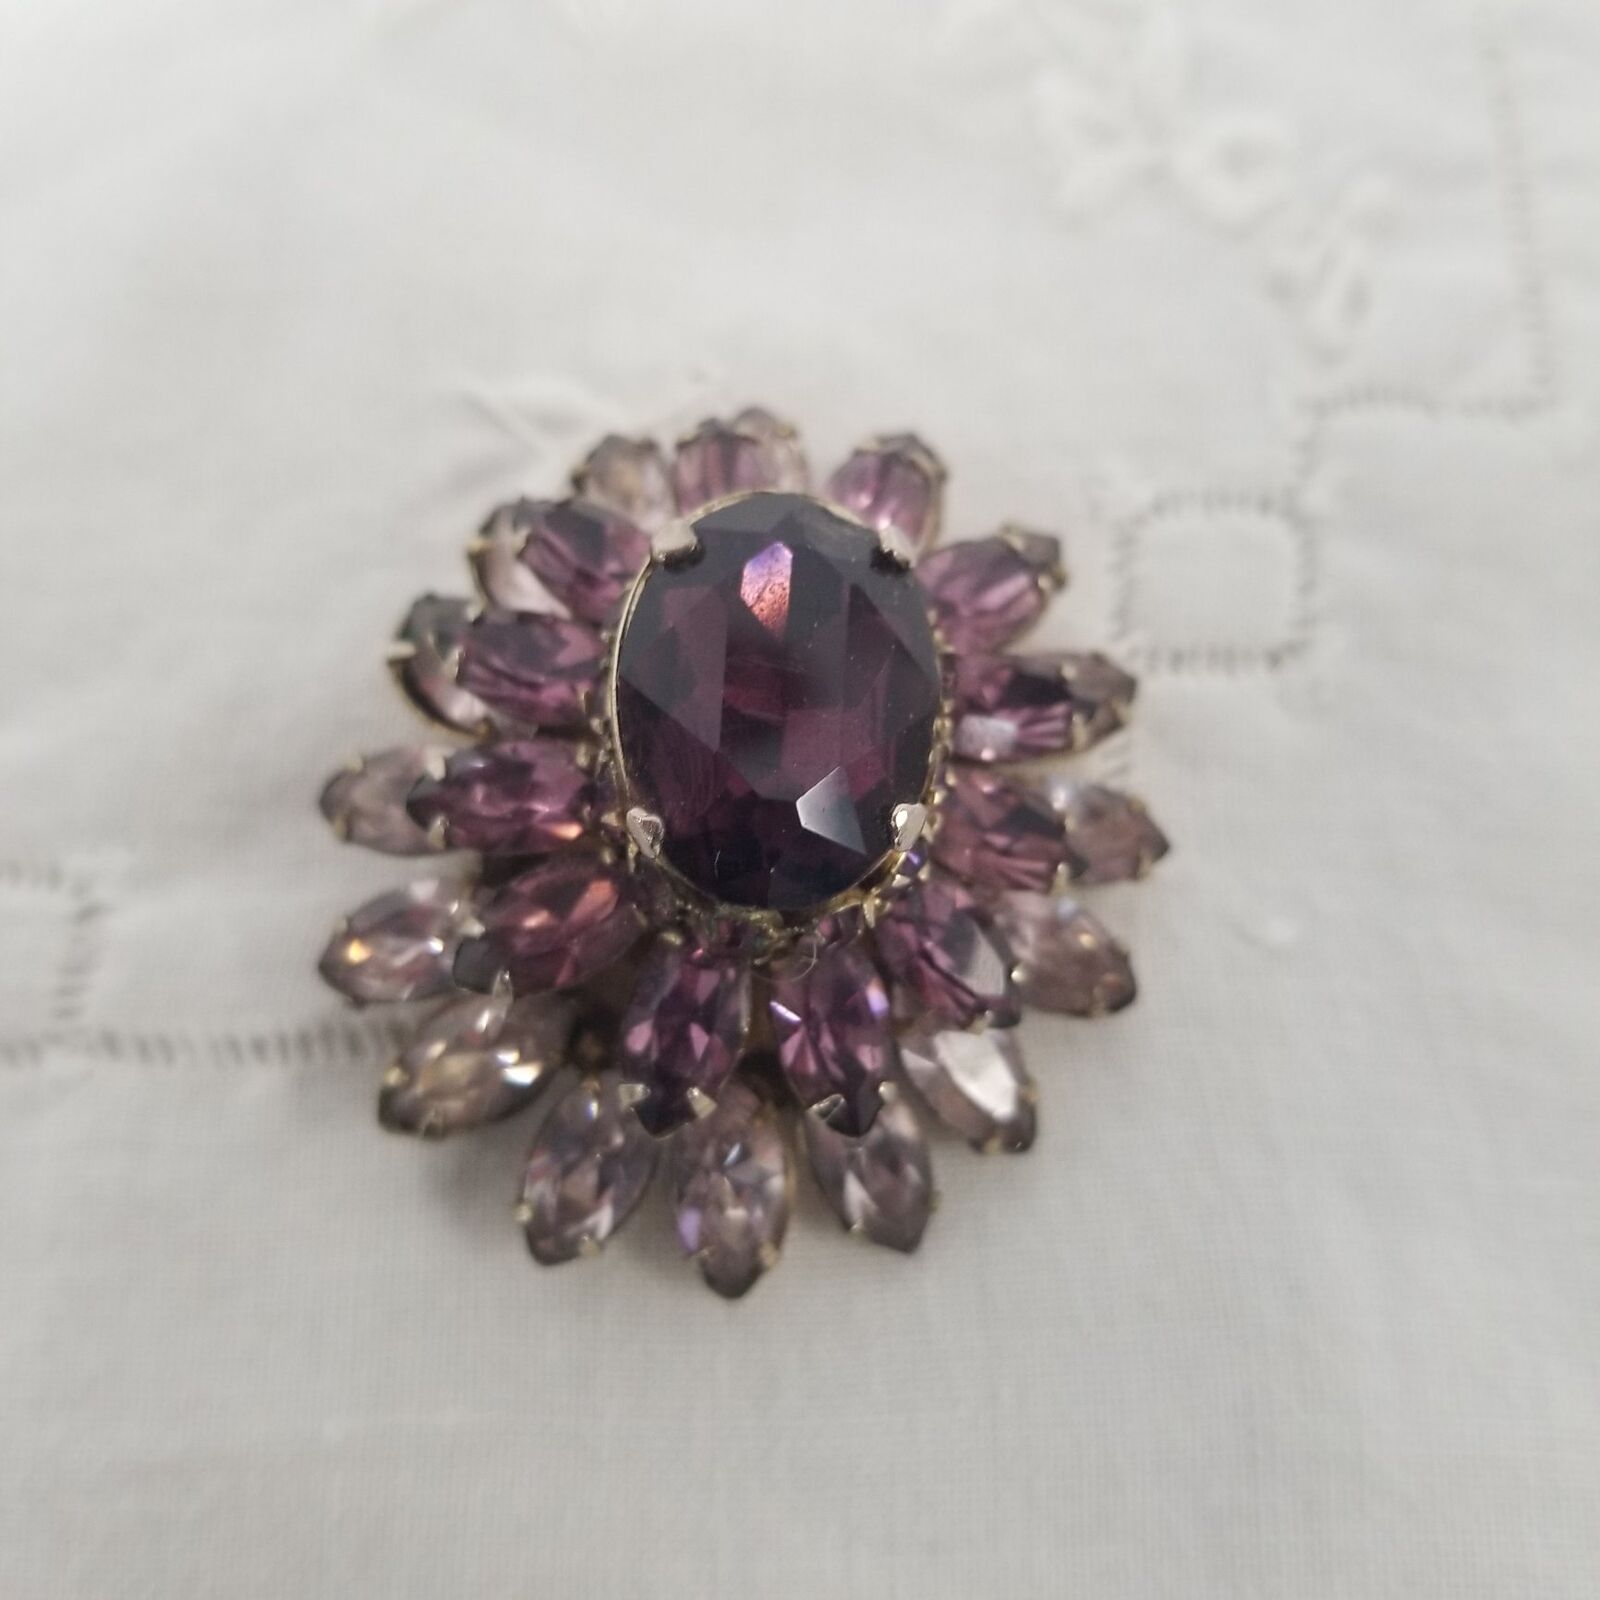 Beautiful Vintage Coro Rhinestone Brooch Purples